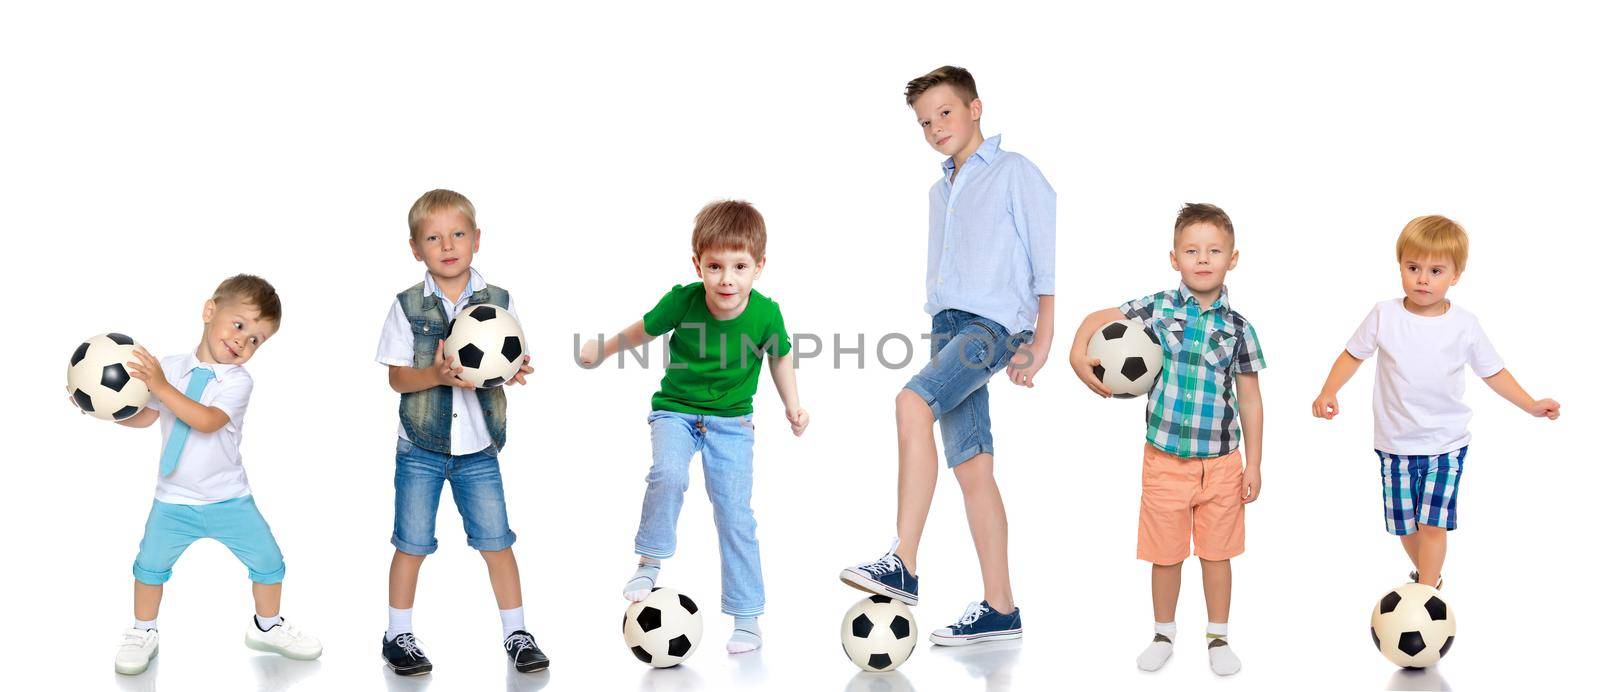 A large group of boys with soccer balls. by kolesnikov_studio